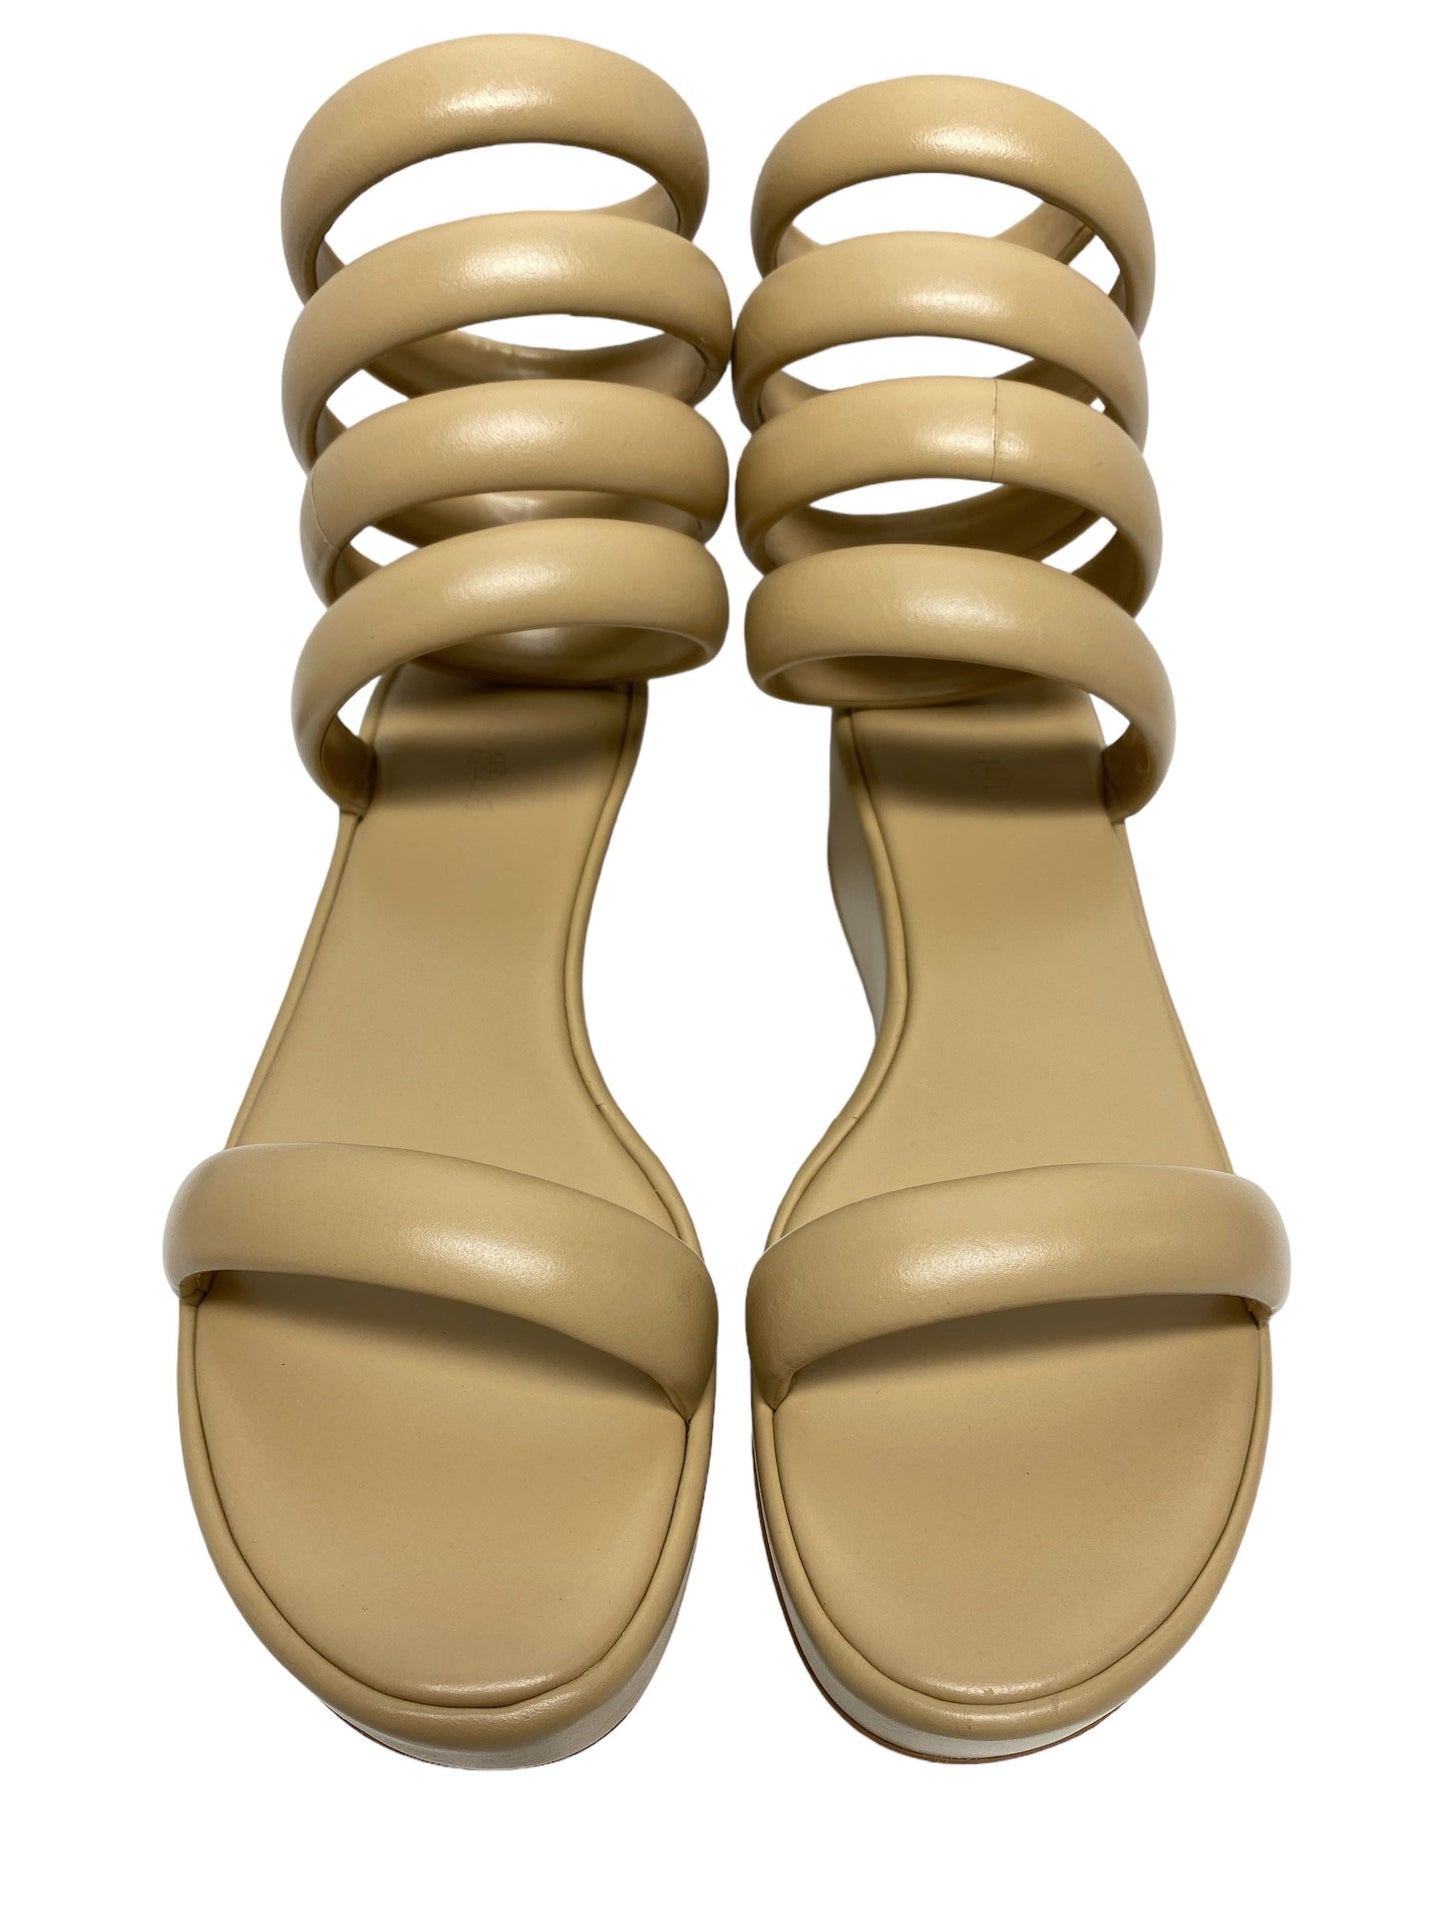 Sandals Designer By Cult Gaia  Size: 7